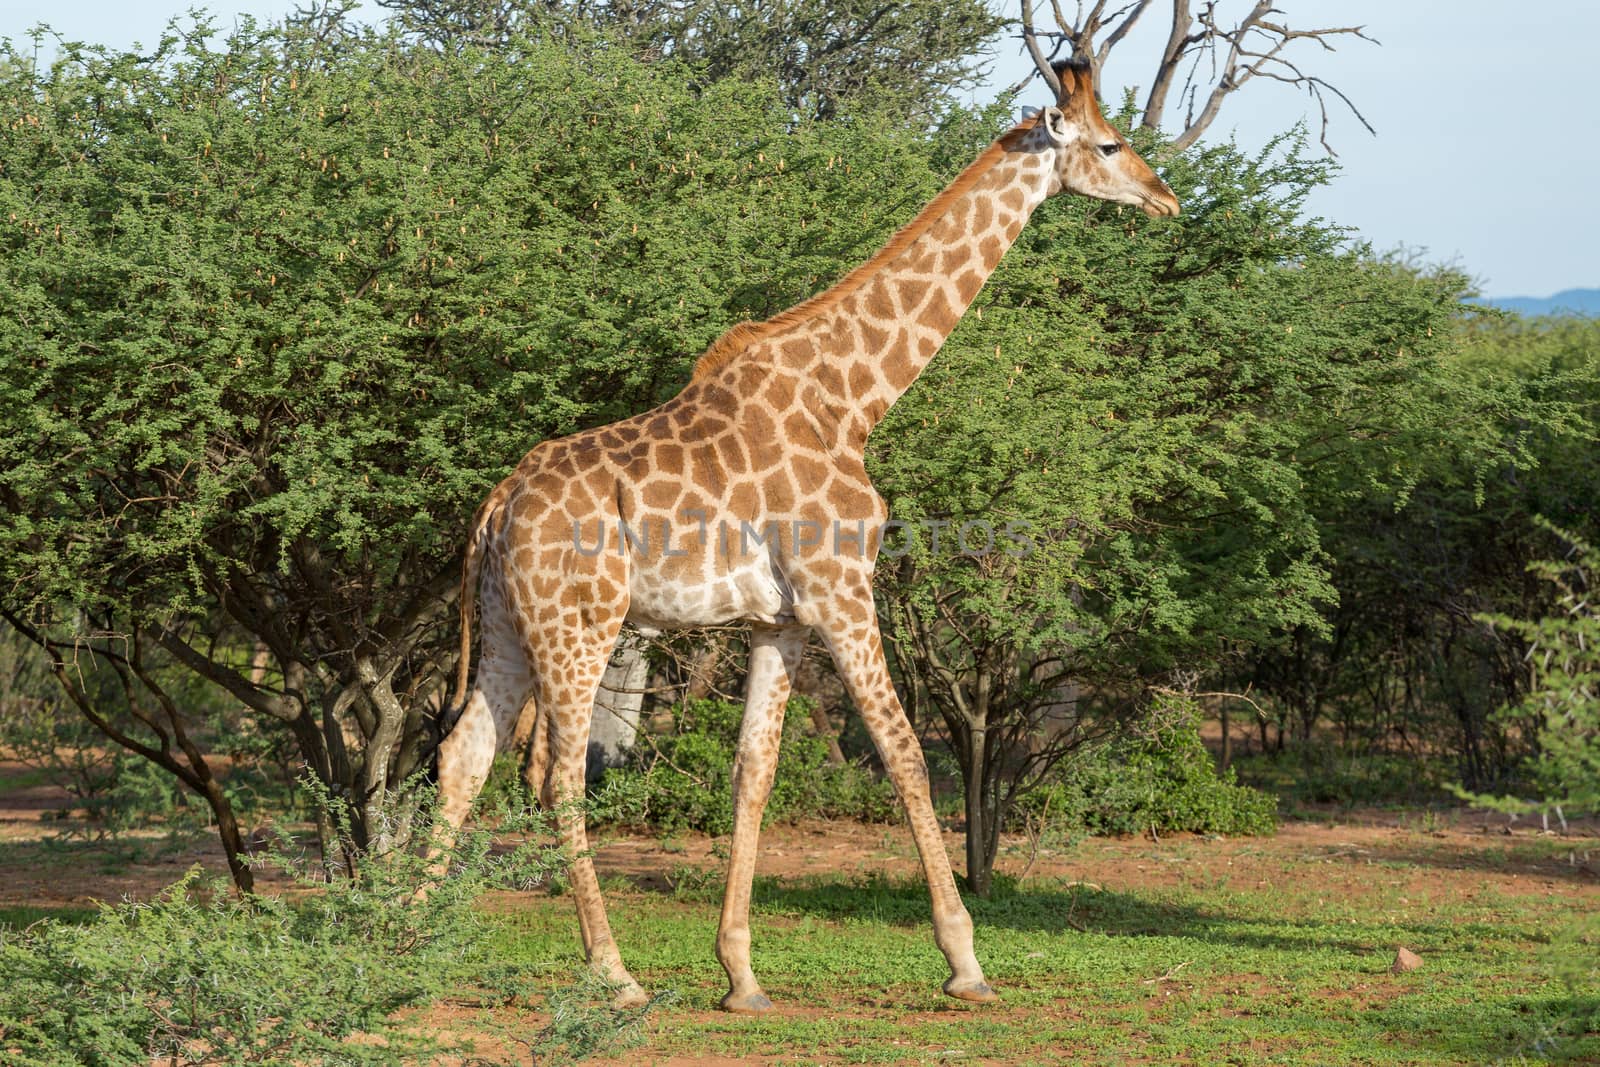 Giraffe in the wild by derejeb